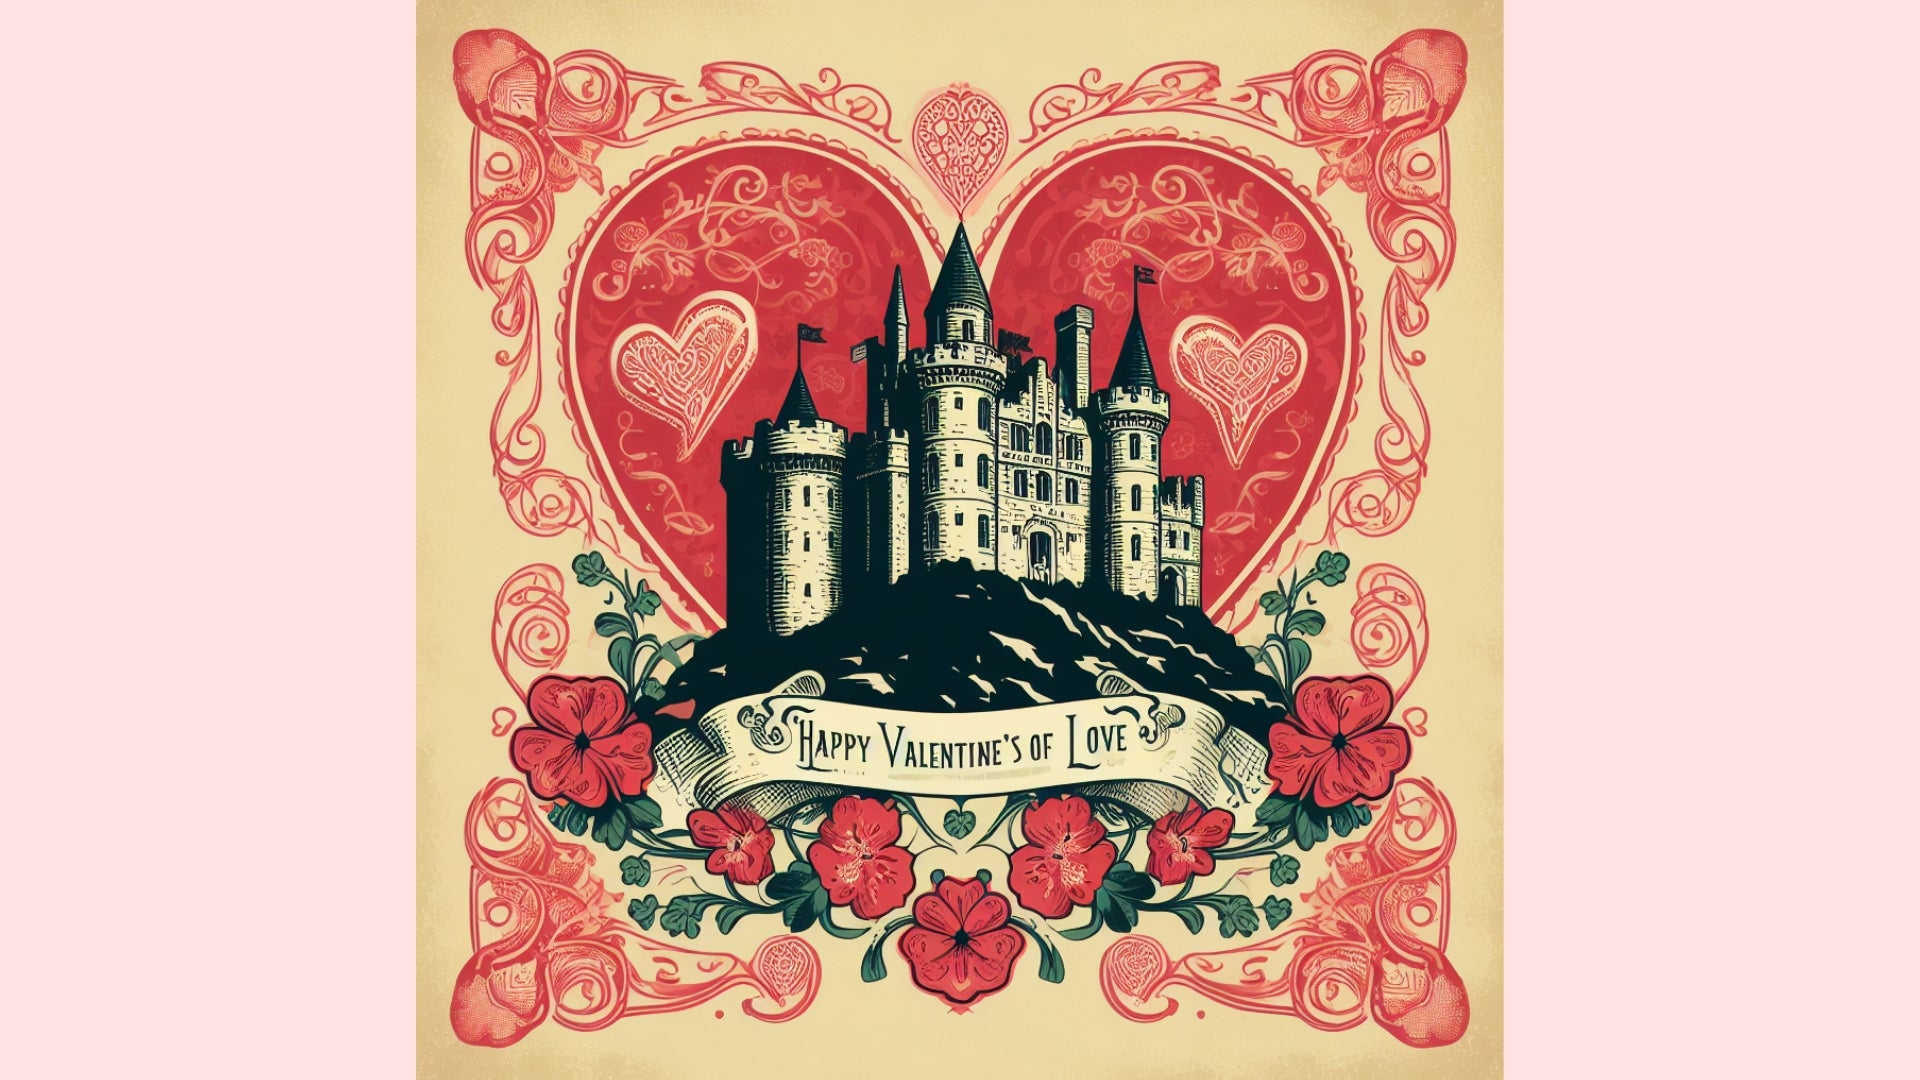 Irish Castles of Love Valentine Card